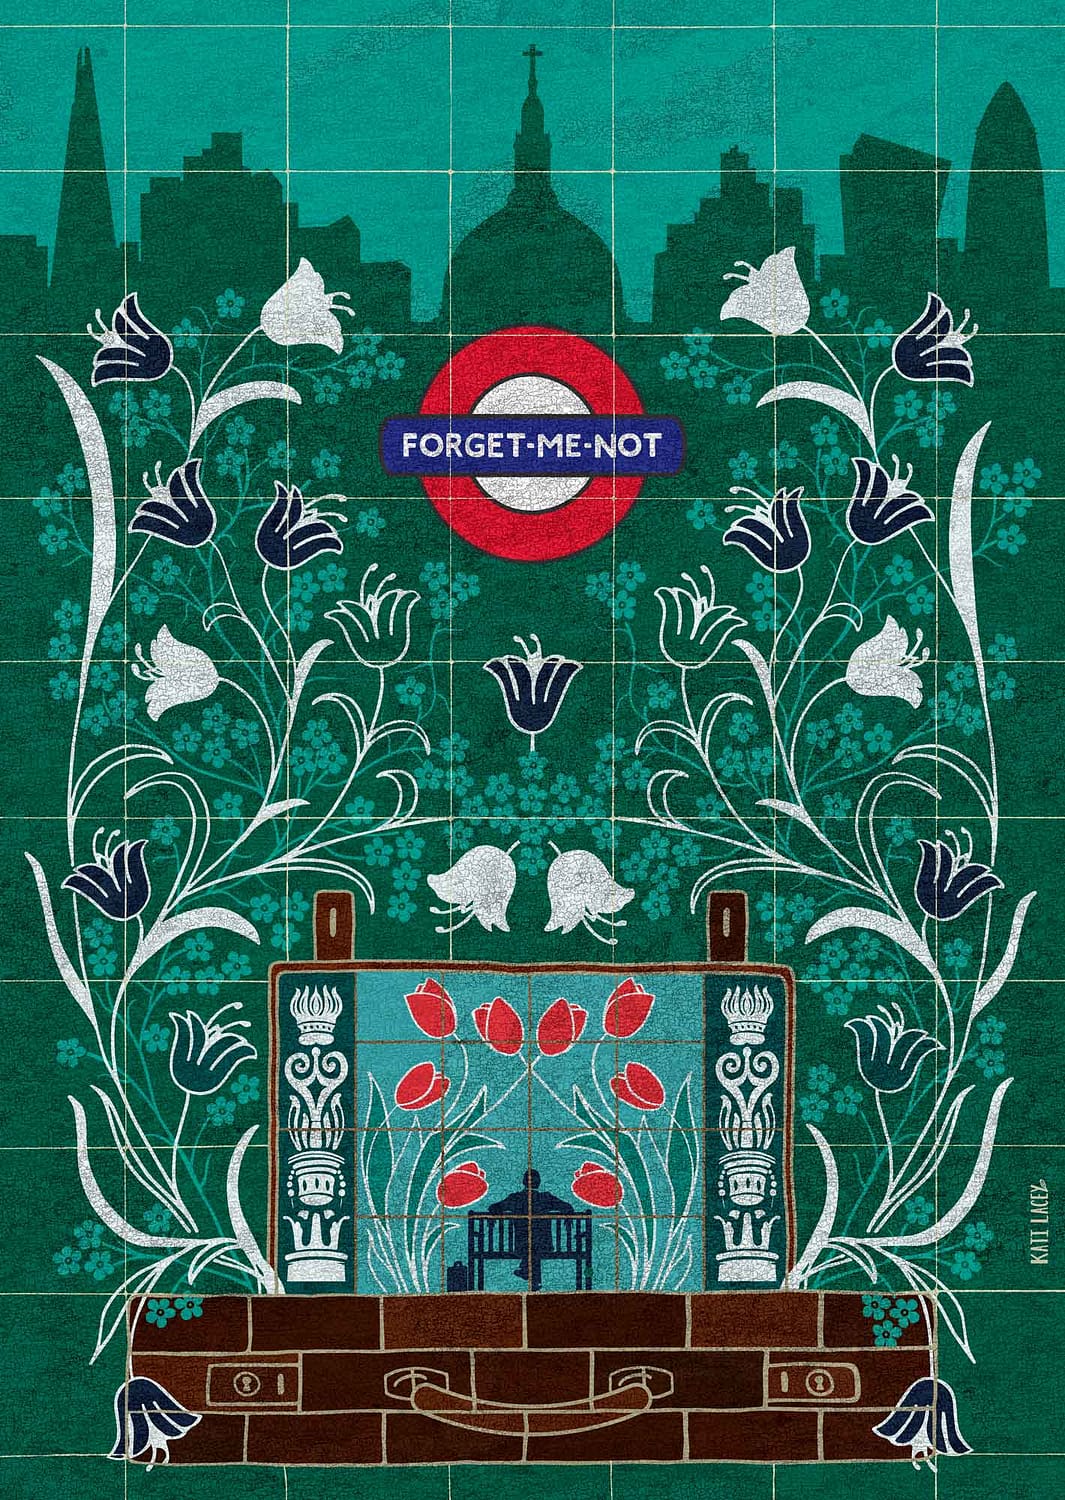 kati-lacey-illustration-editorial-conceptual-poster-postmans park-Watts-memorial-Victorian-everyday-heroes-flowers-garden-businessman-park-tulips-london-underground-suitcase-tiles-illustration